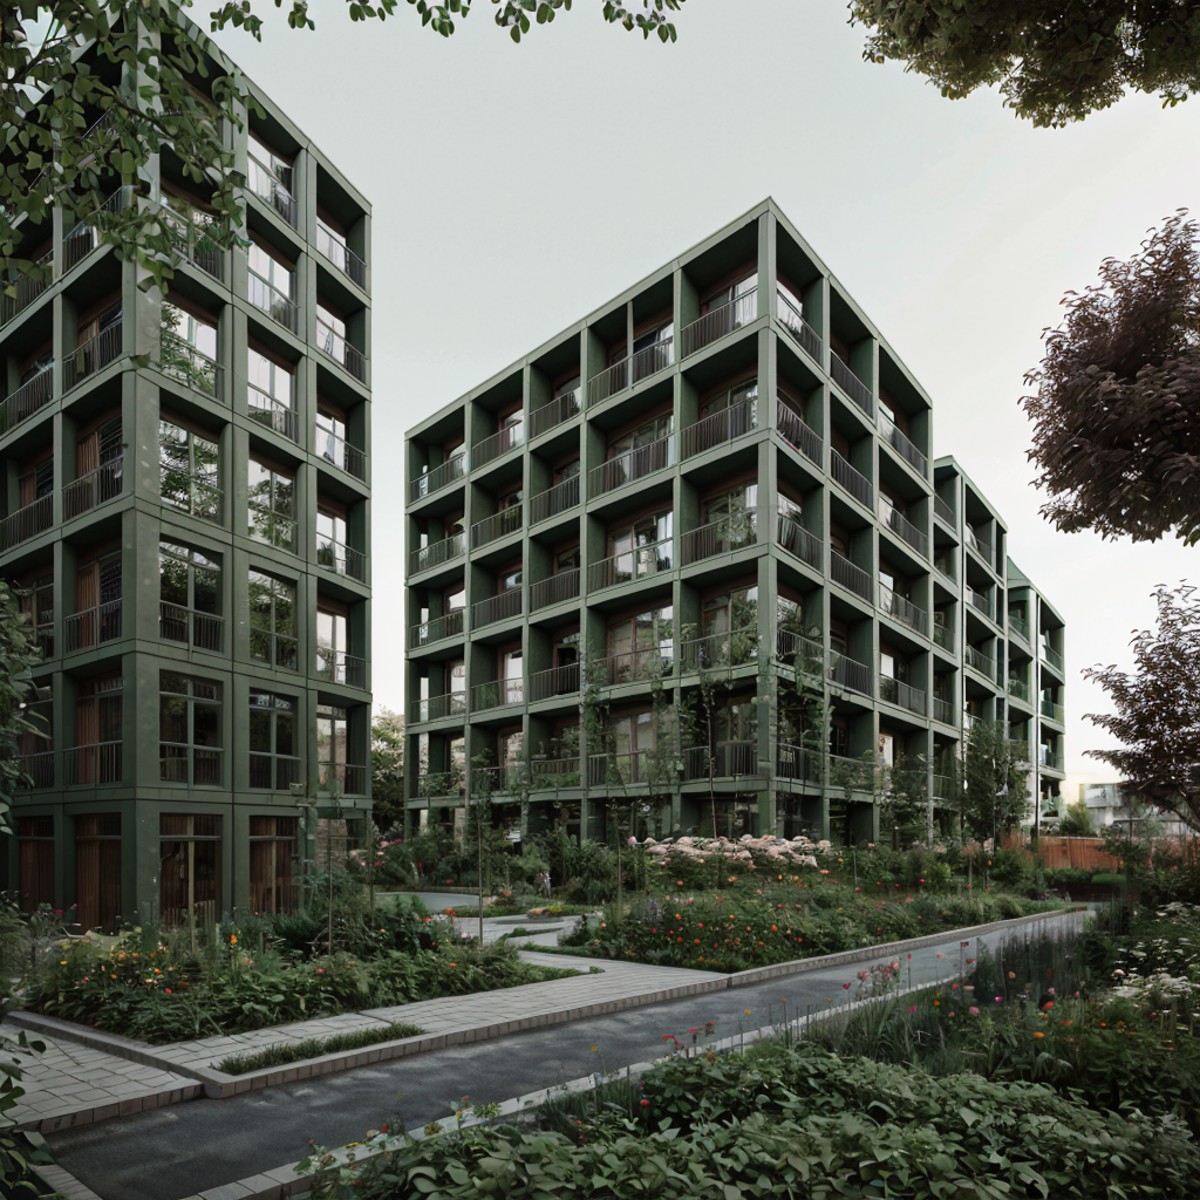 RAW photo of a co-housing residential complex, common garden, 1man, flower, bush, render, matte color facade, entire build...